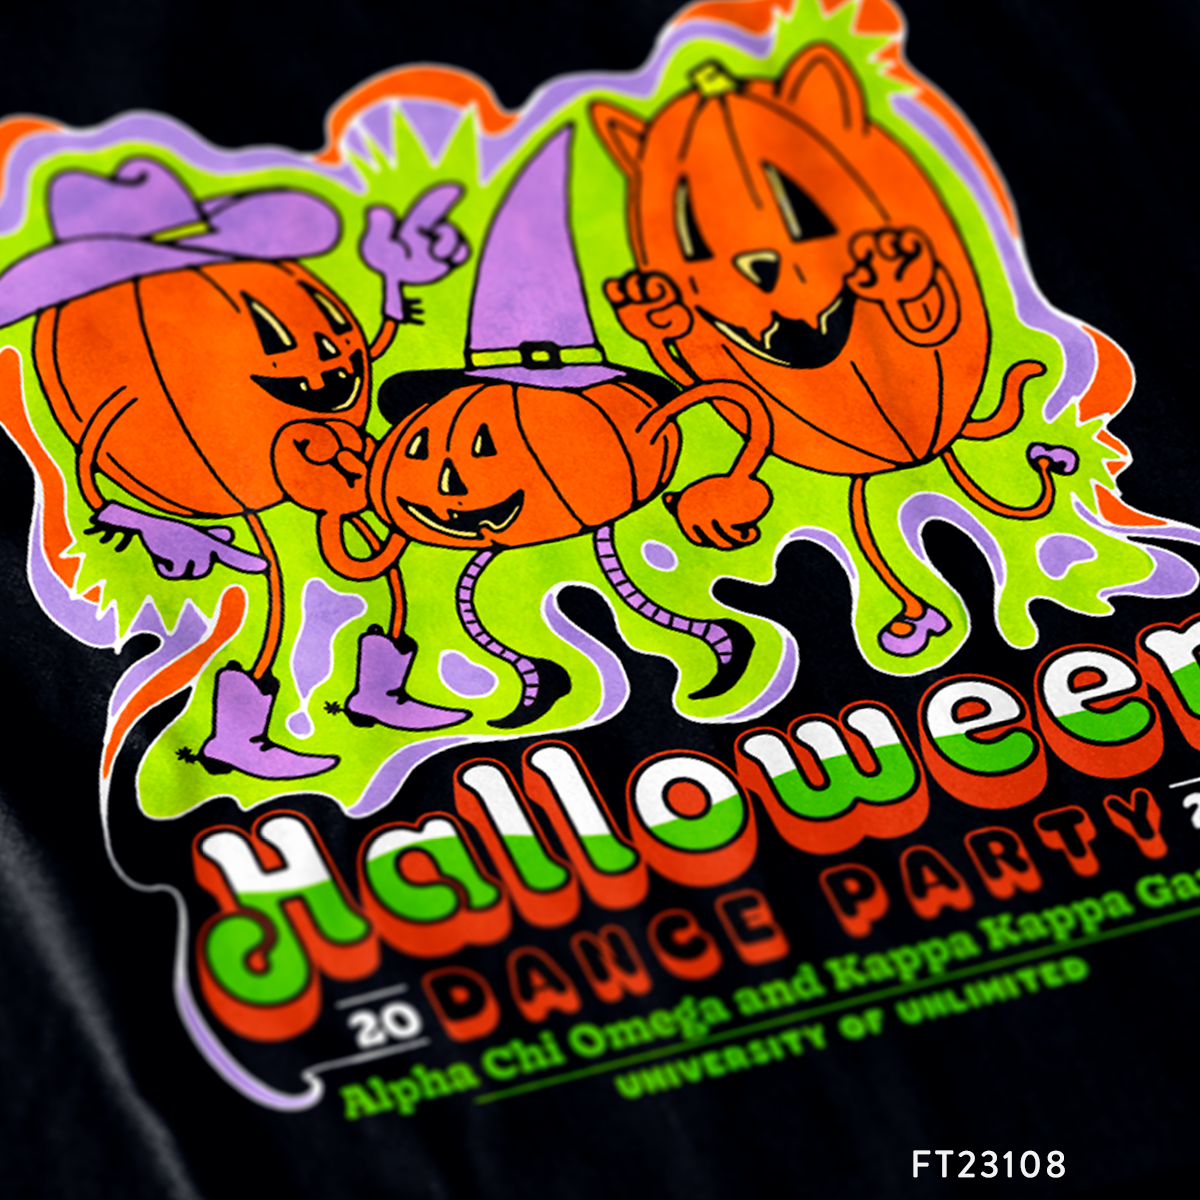 Alpha Chi Omega Halloween Dance Party T-Shirt Design